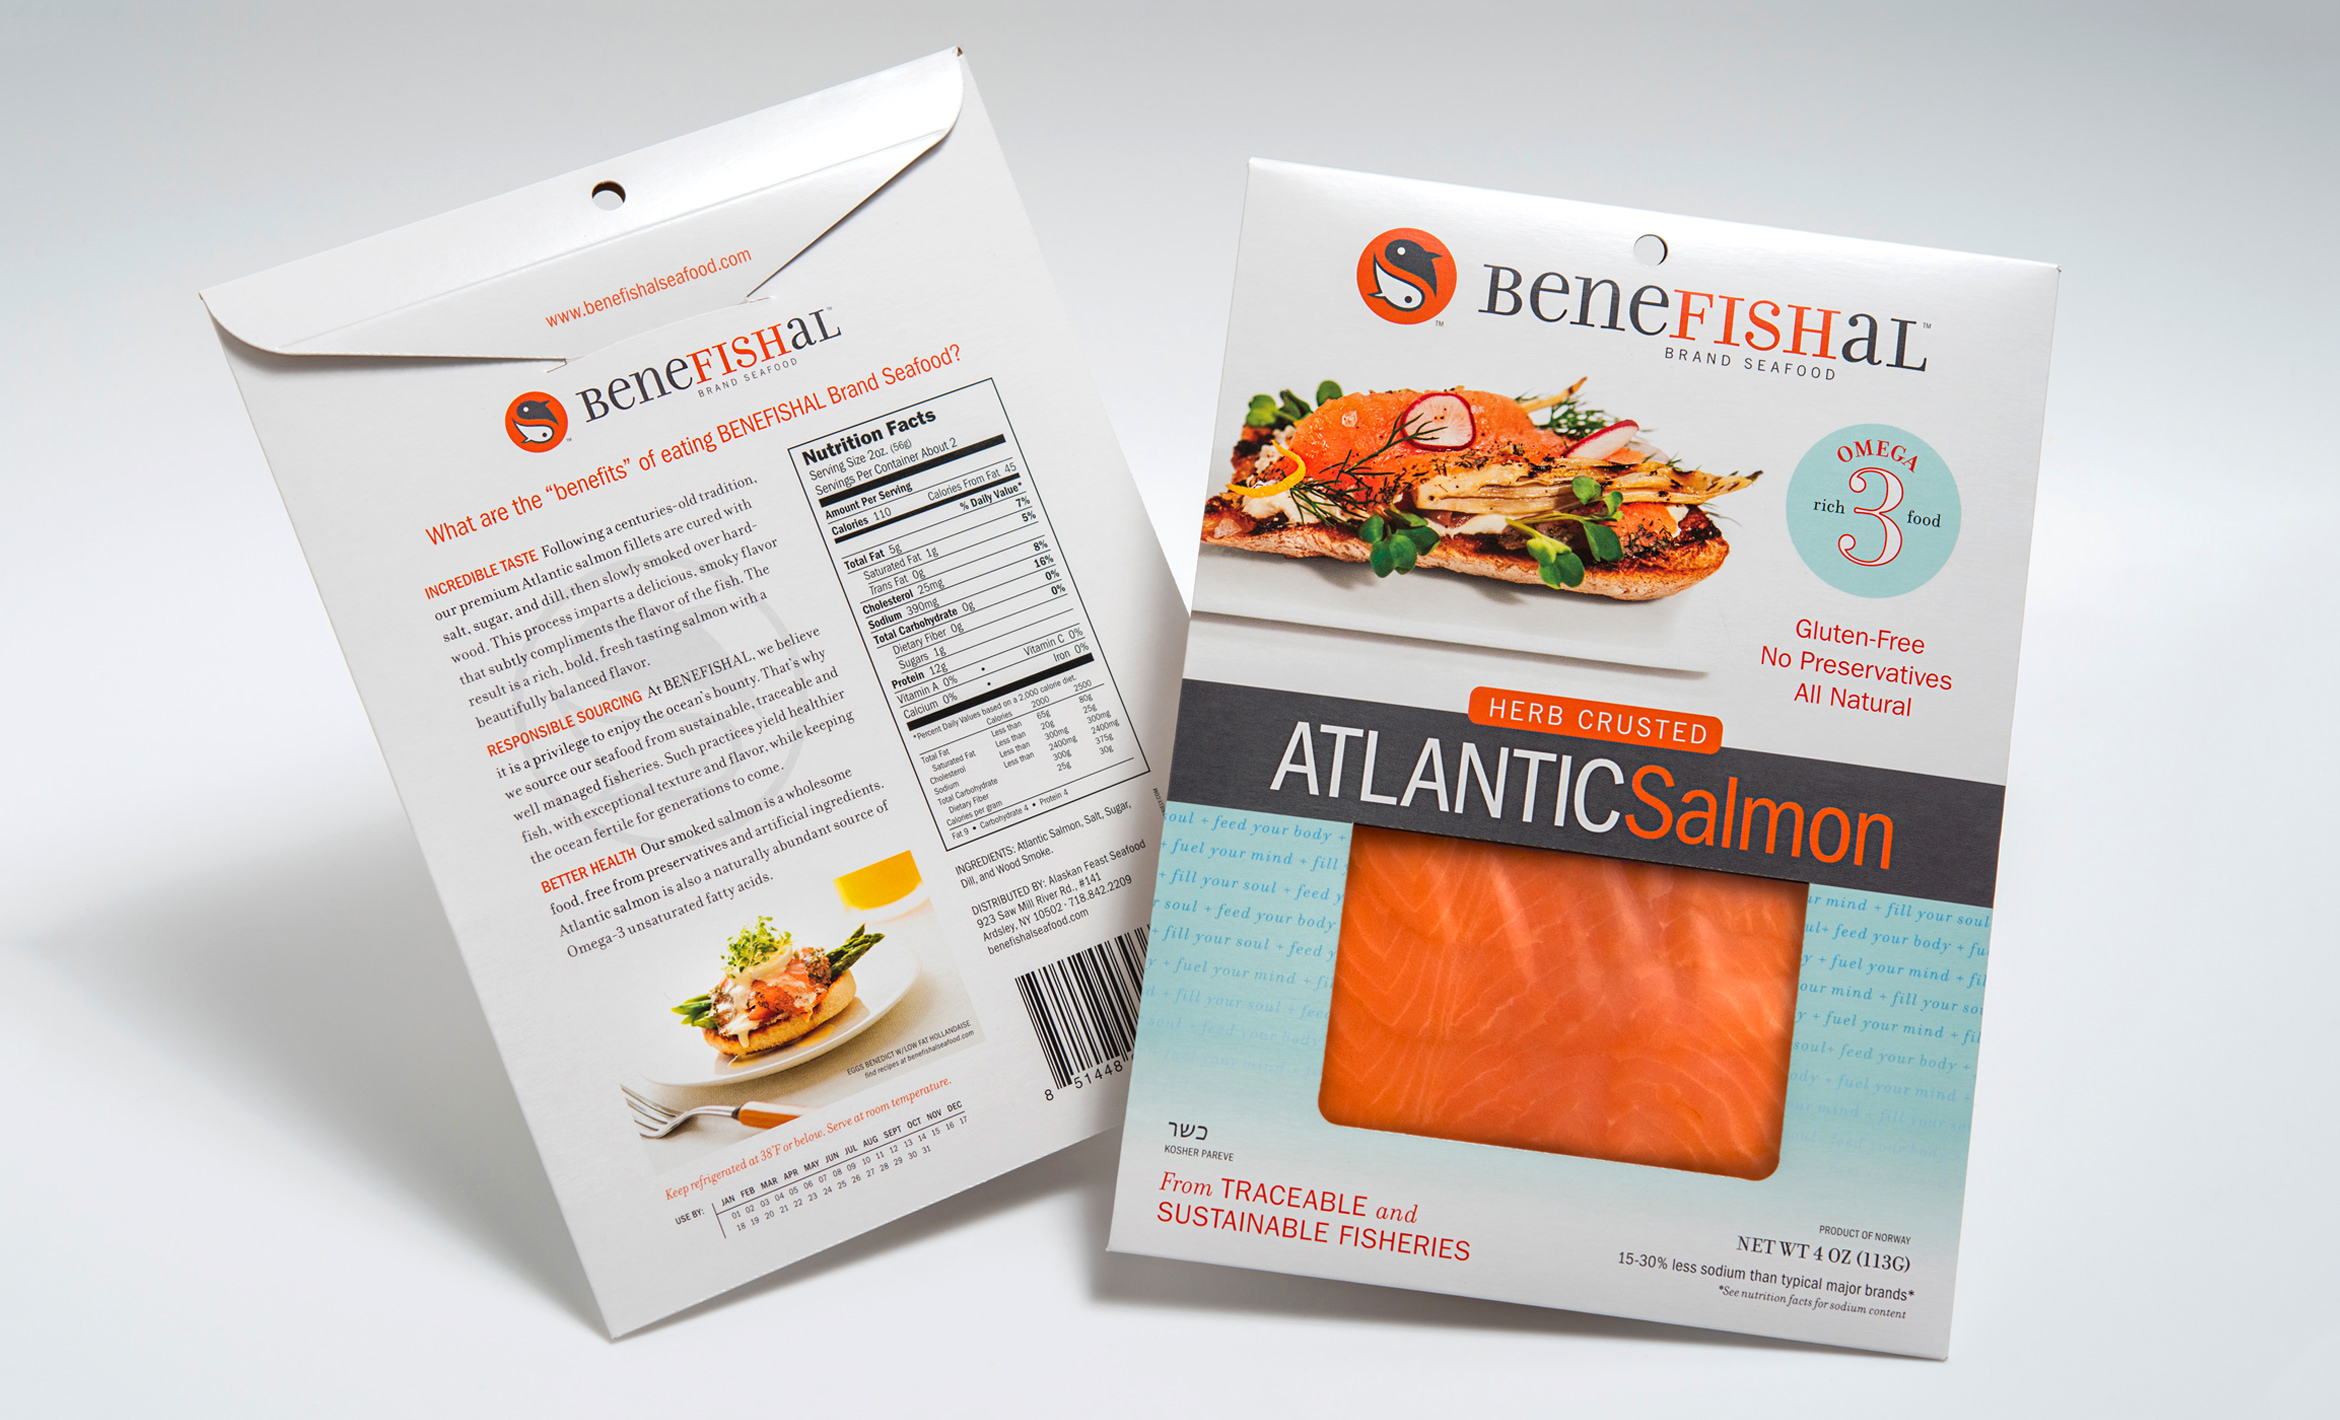 Benefishal Atlantic Salmon Packaging